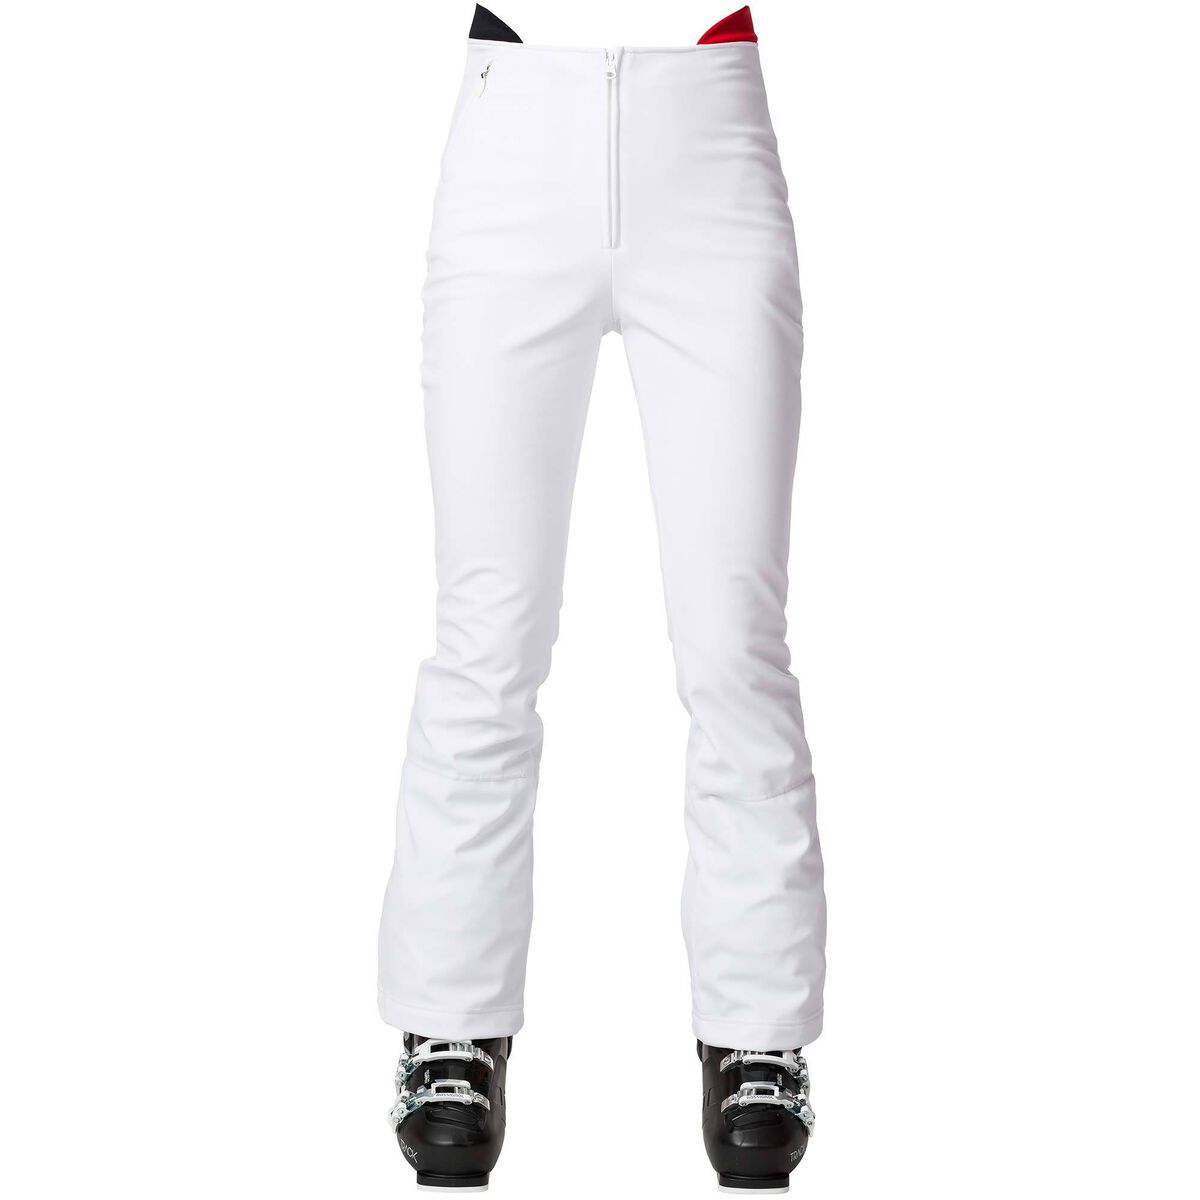 Rossignol Women's Medaille Ski Pants White